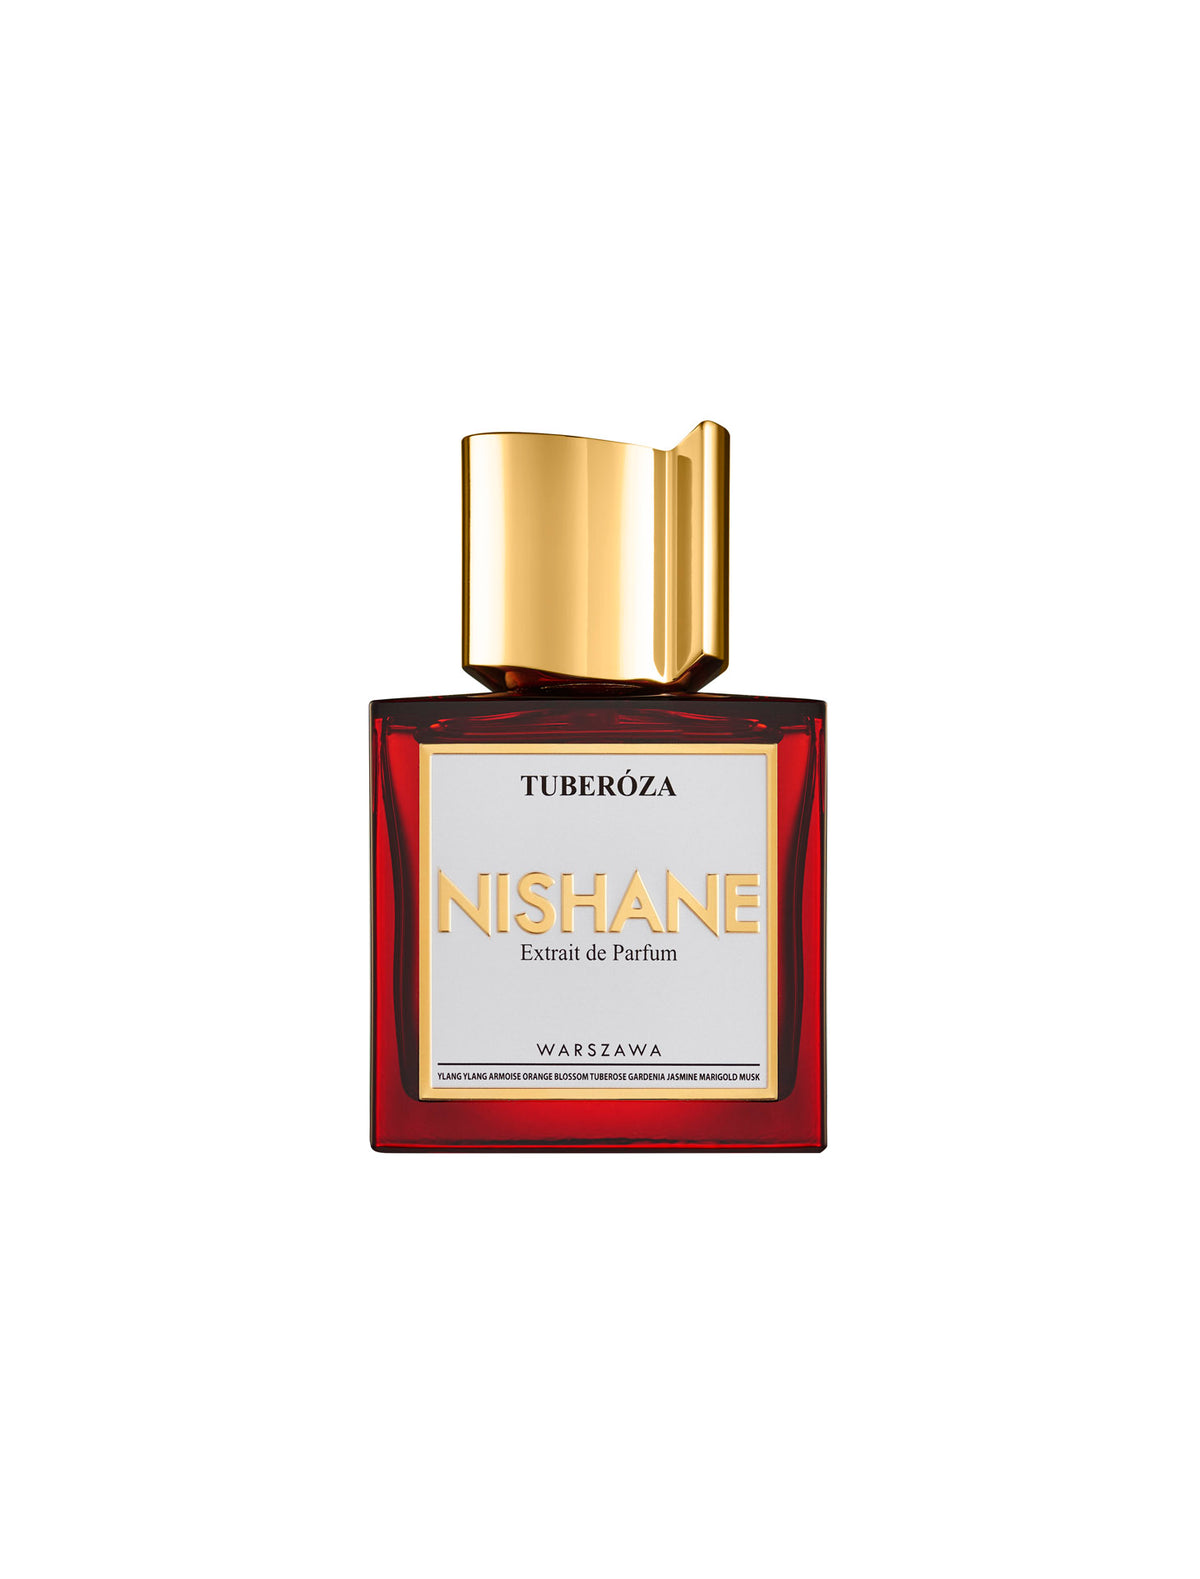 NISHANE Tuberóza Perfume Extract 50ML